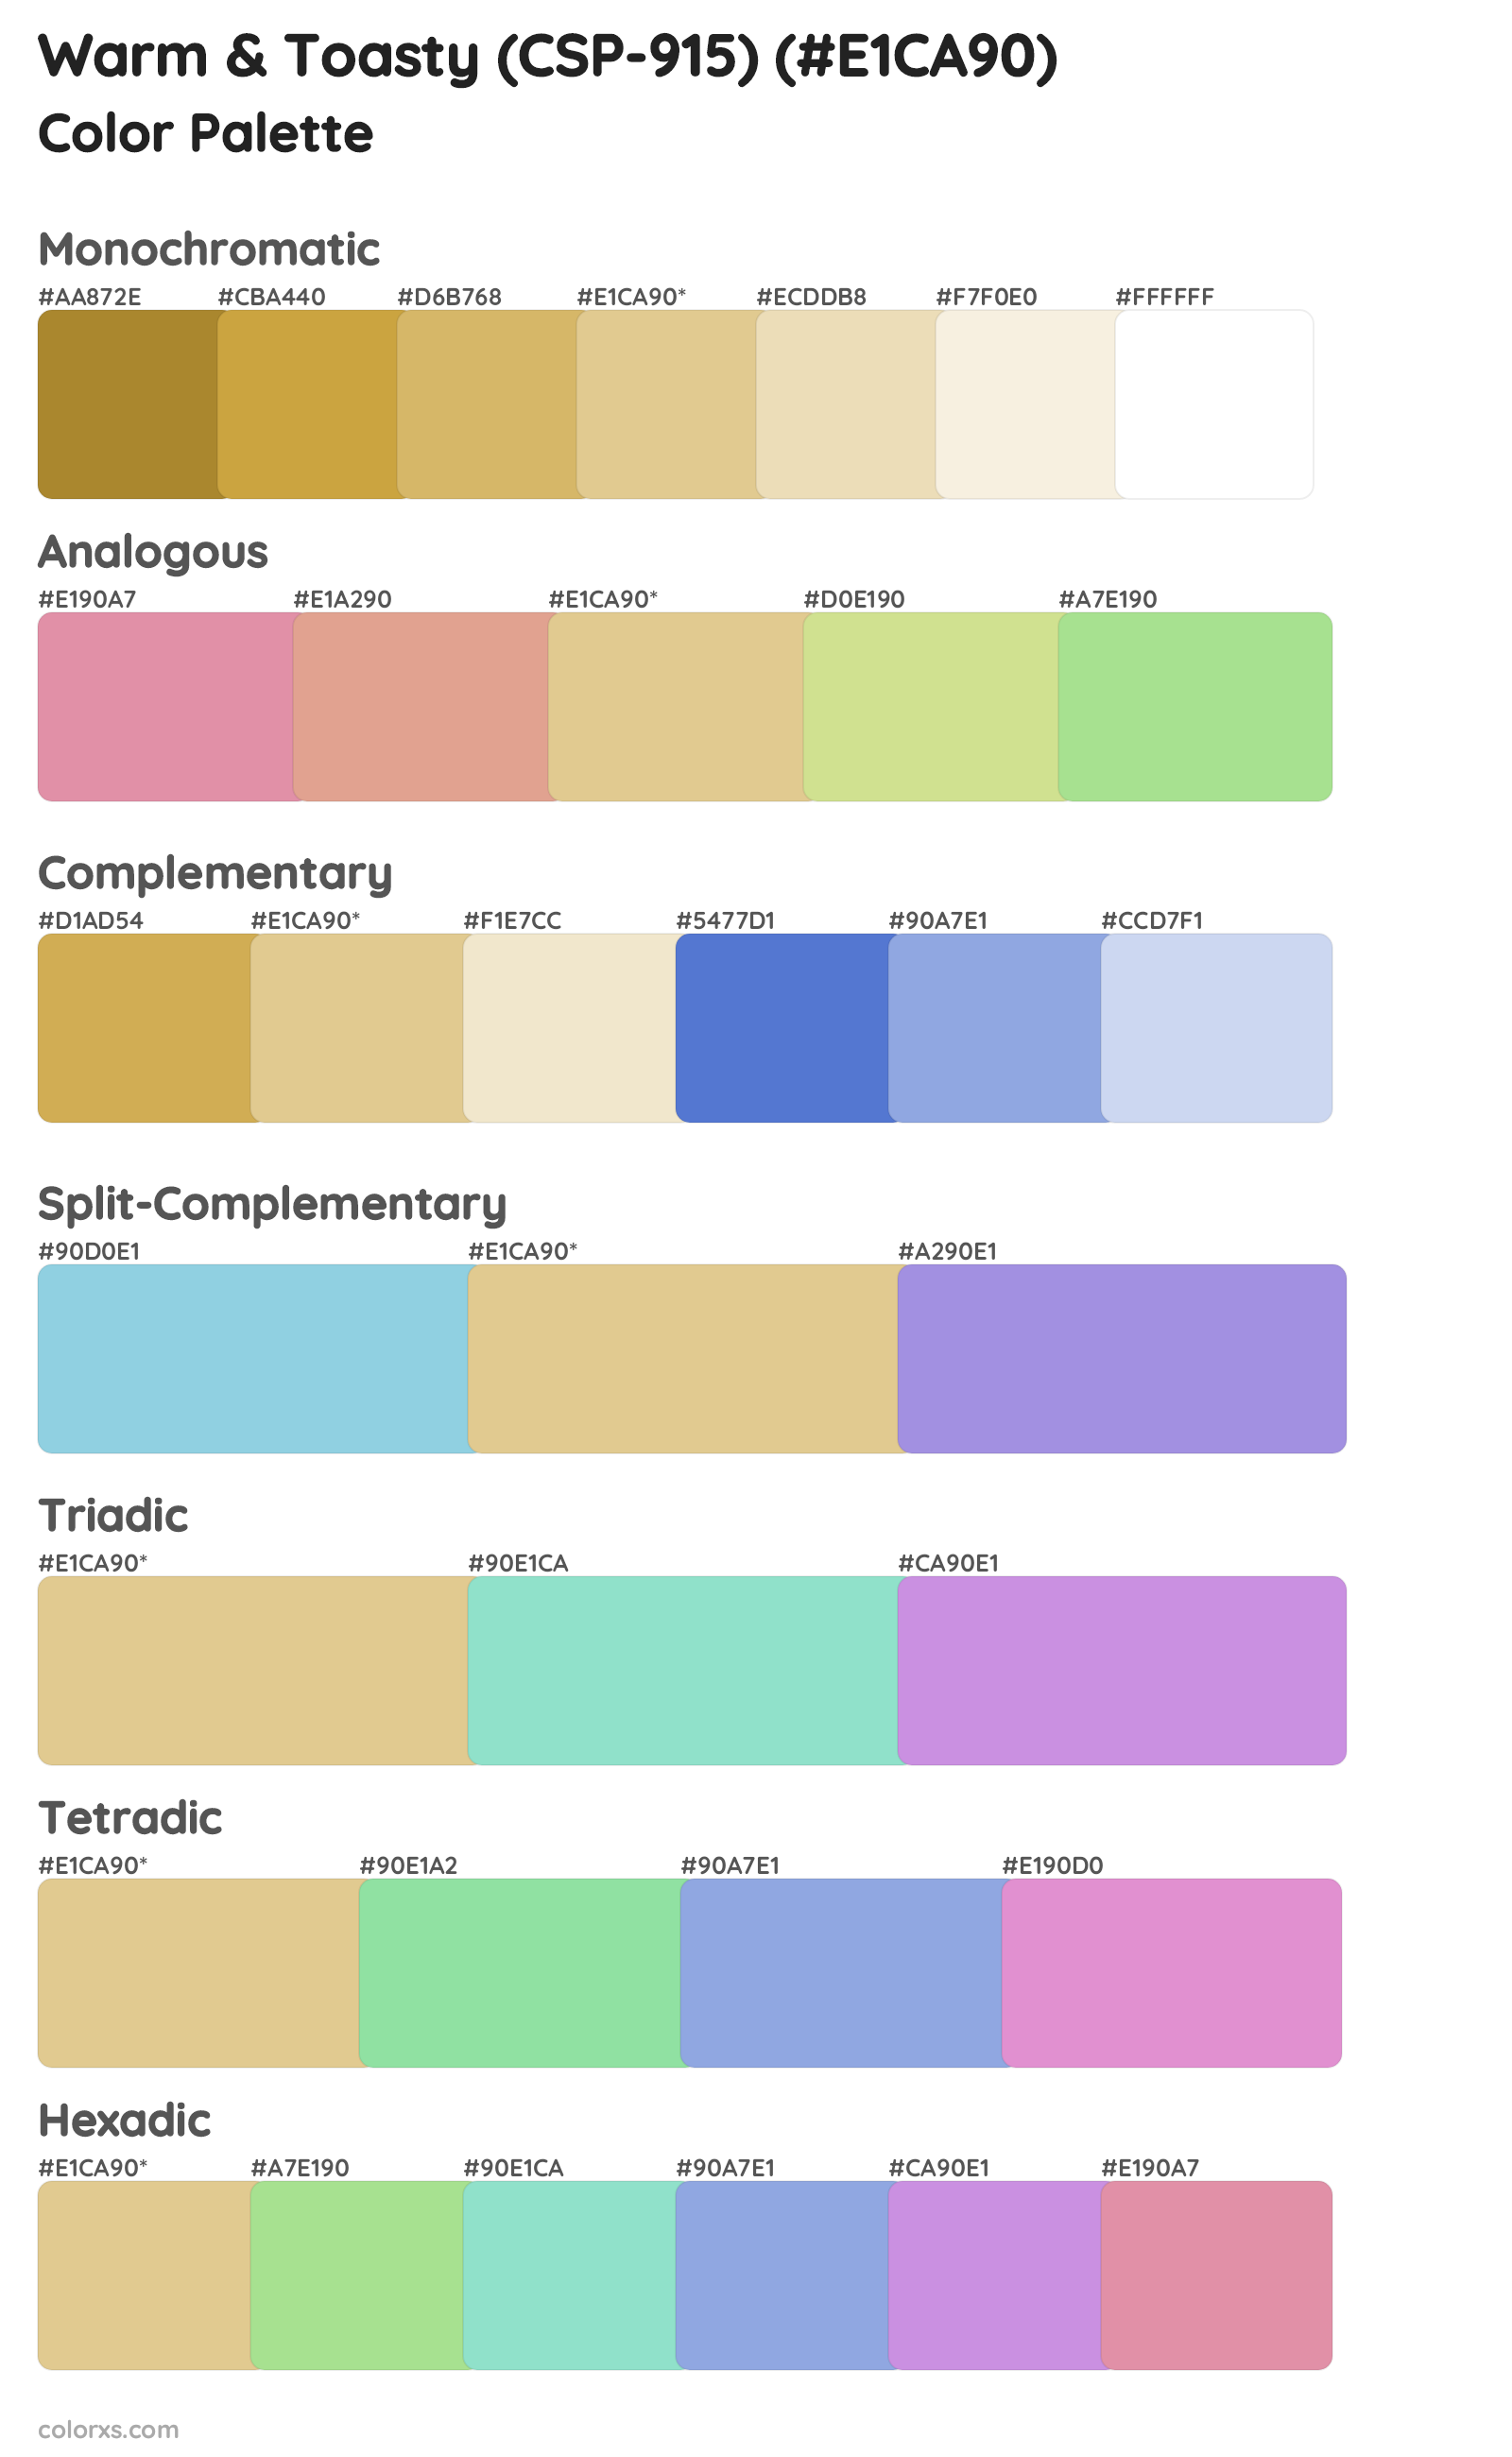 Warm & Toasty (CSP-915) Color Scheme Palettes